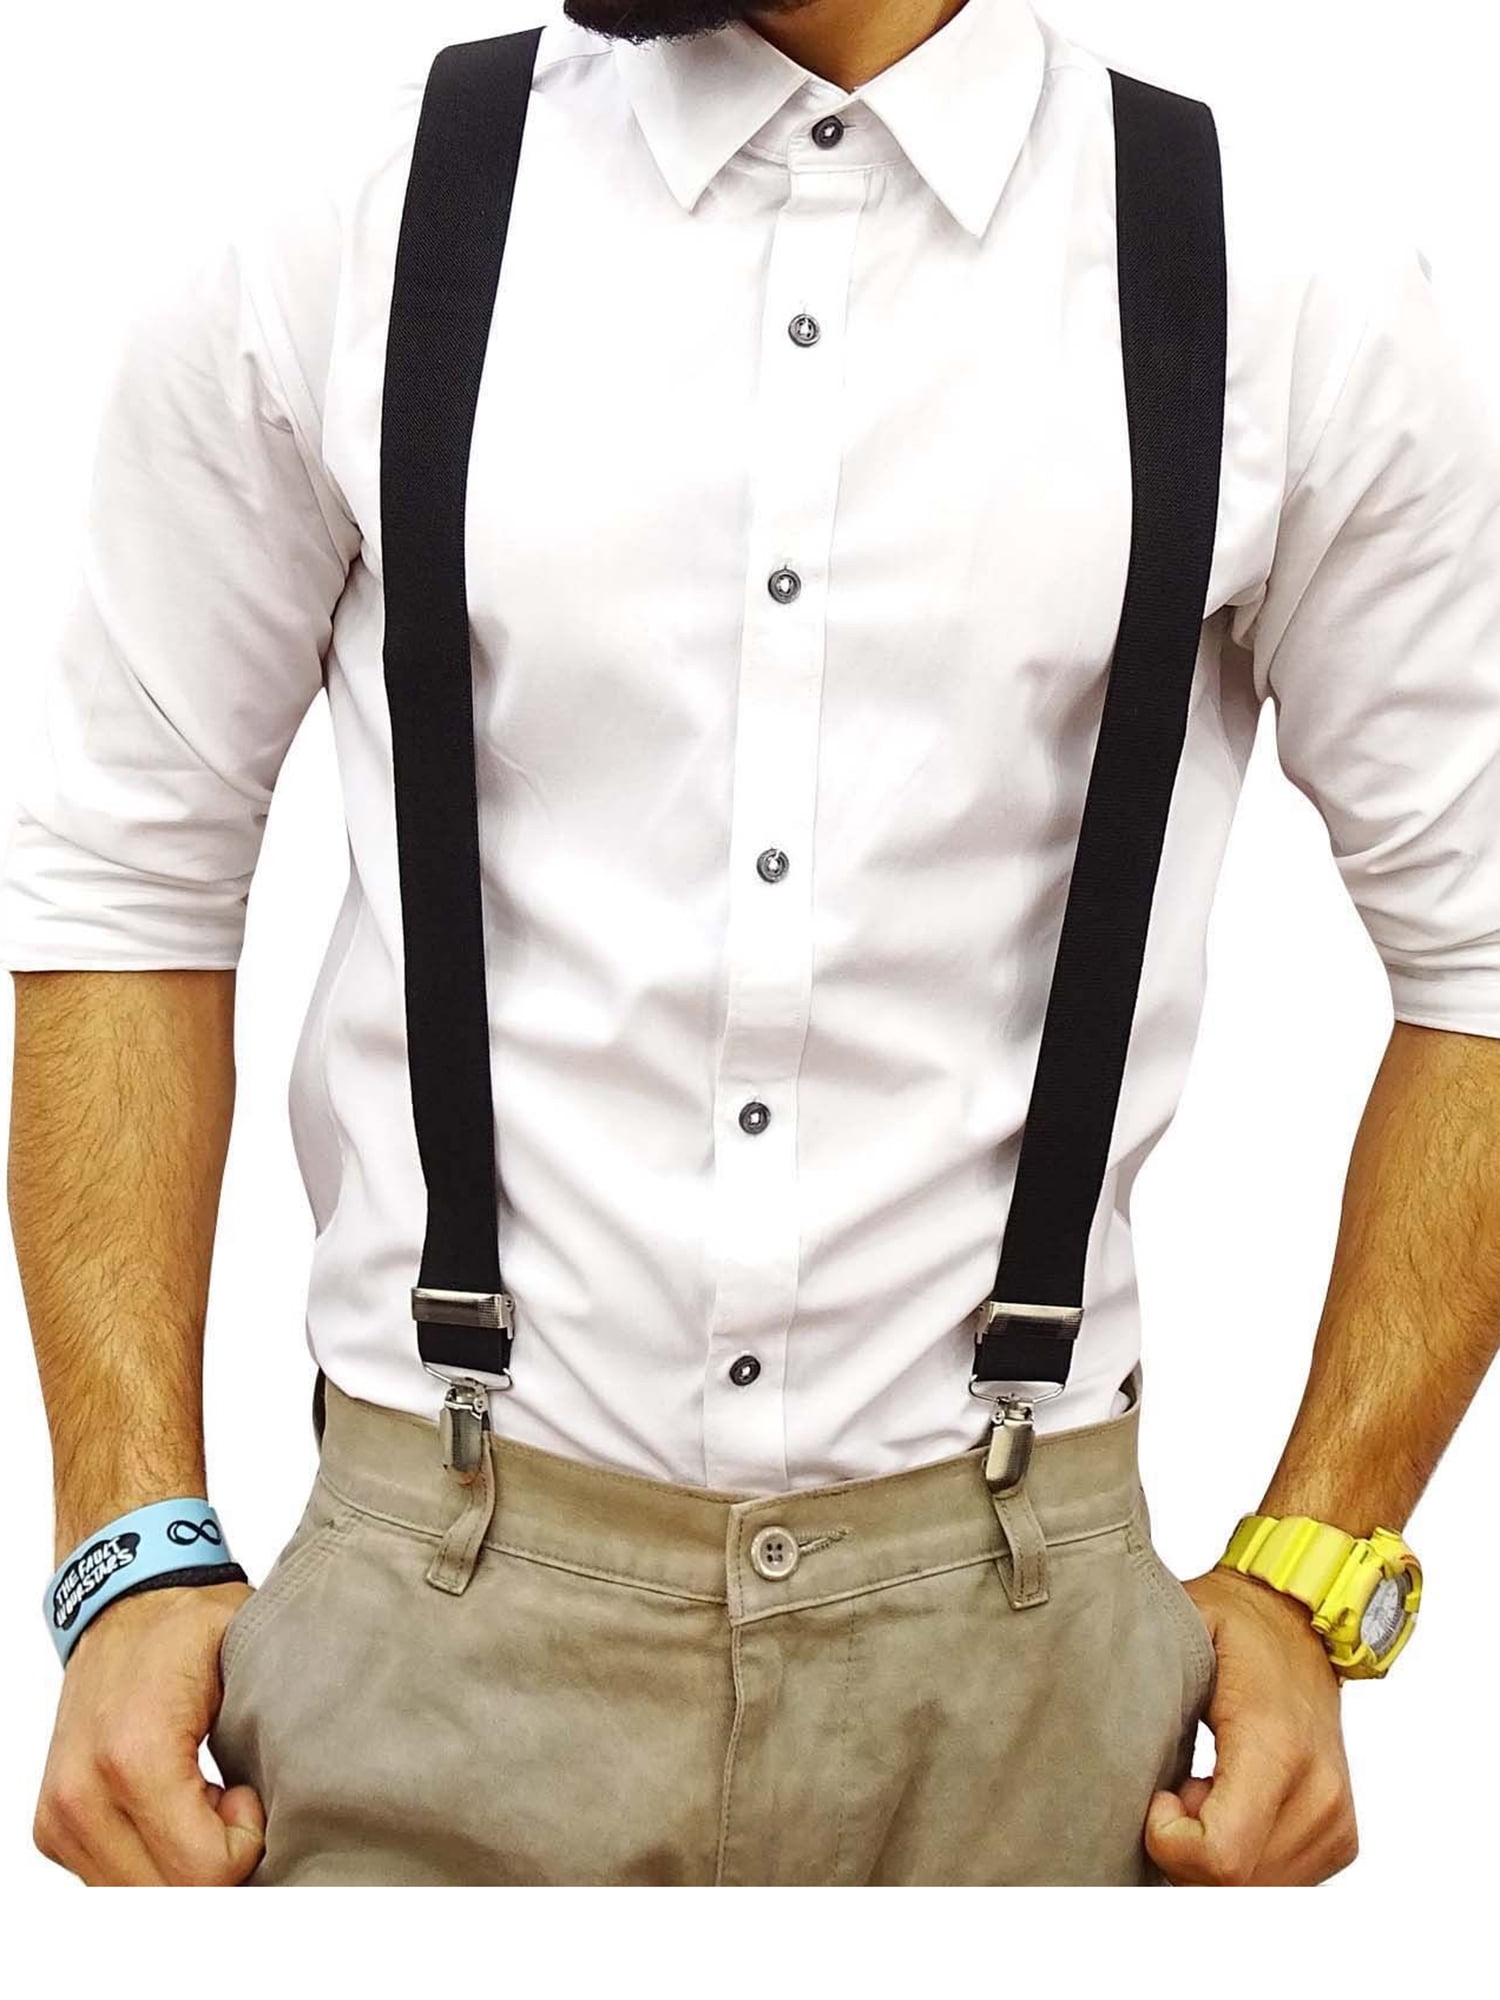 Details about   Mens 4 Colors Elastic Suspenders Leather Braces X-Back Adjustable Clip-on . 